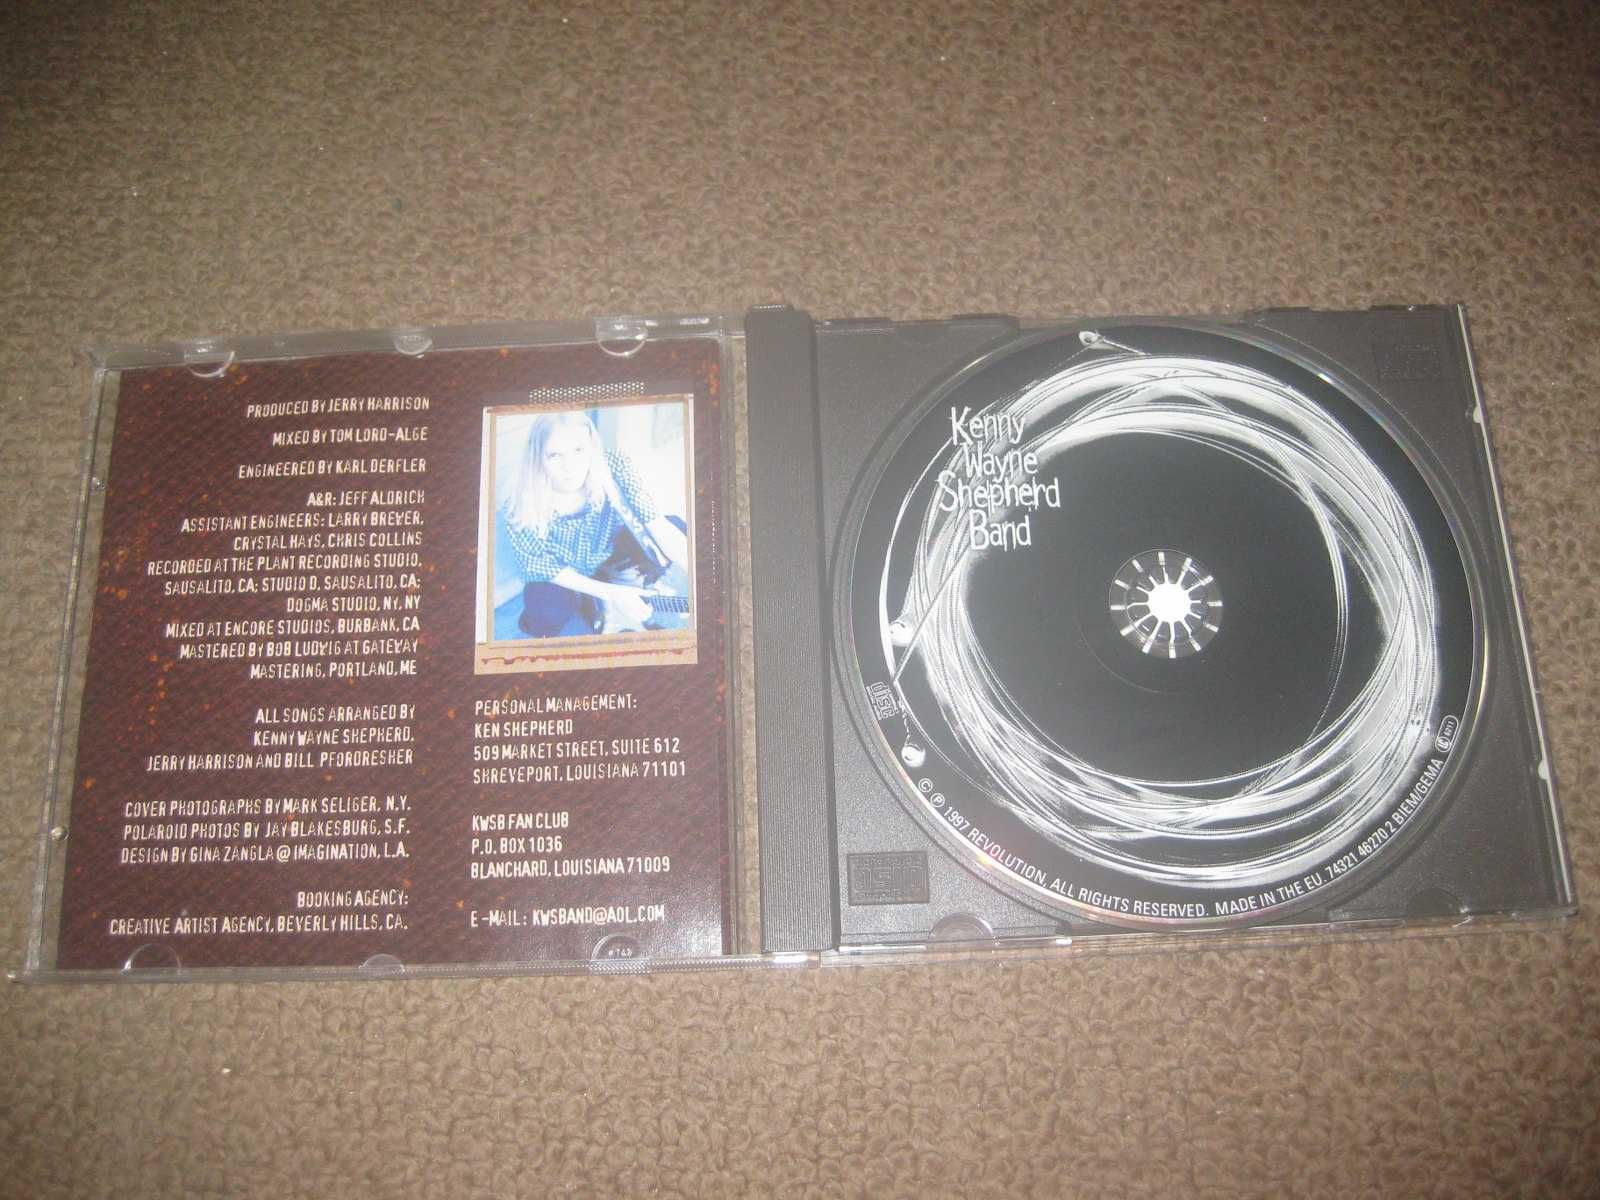 CD do Kenny Wayne Shepherd "Trouble Is..." Portes Grátis!